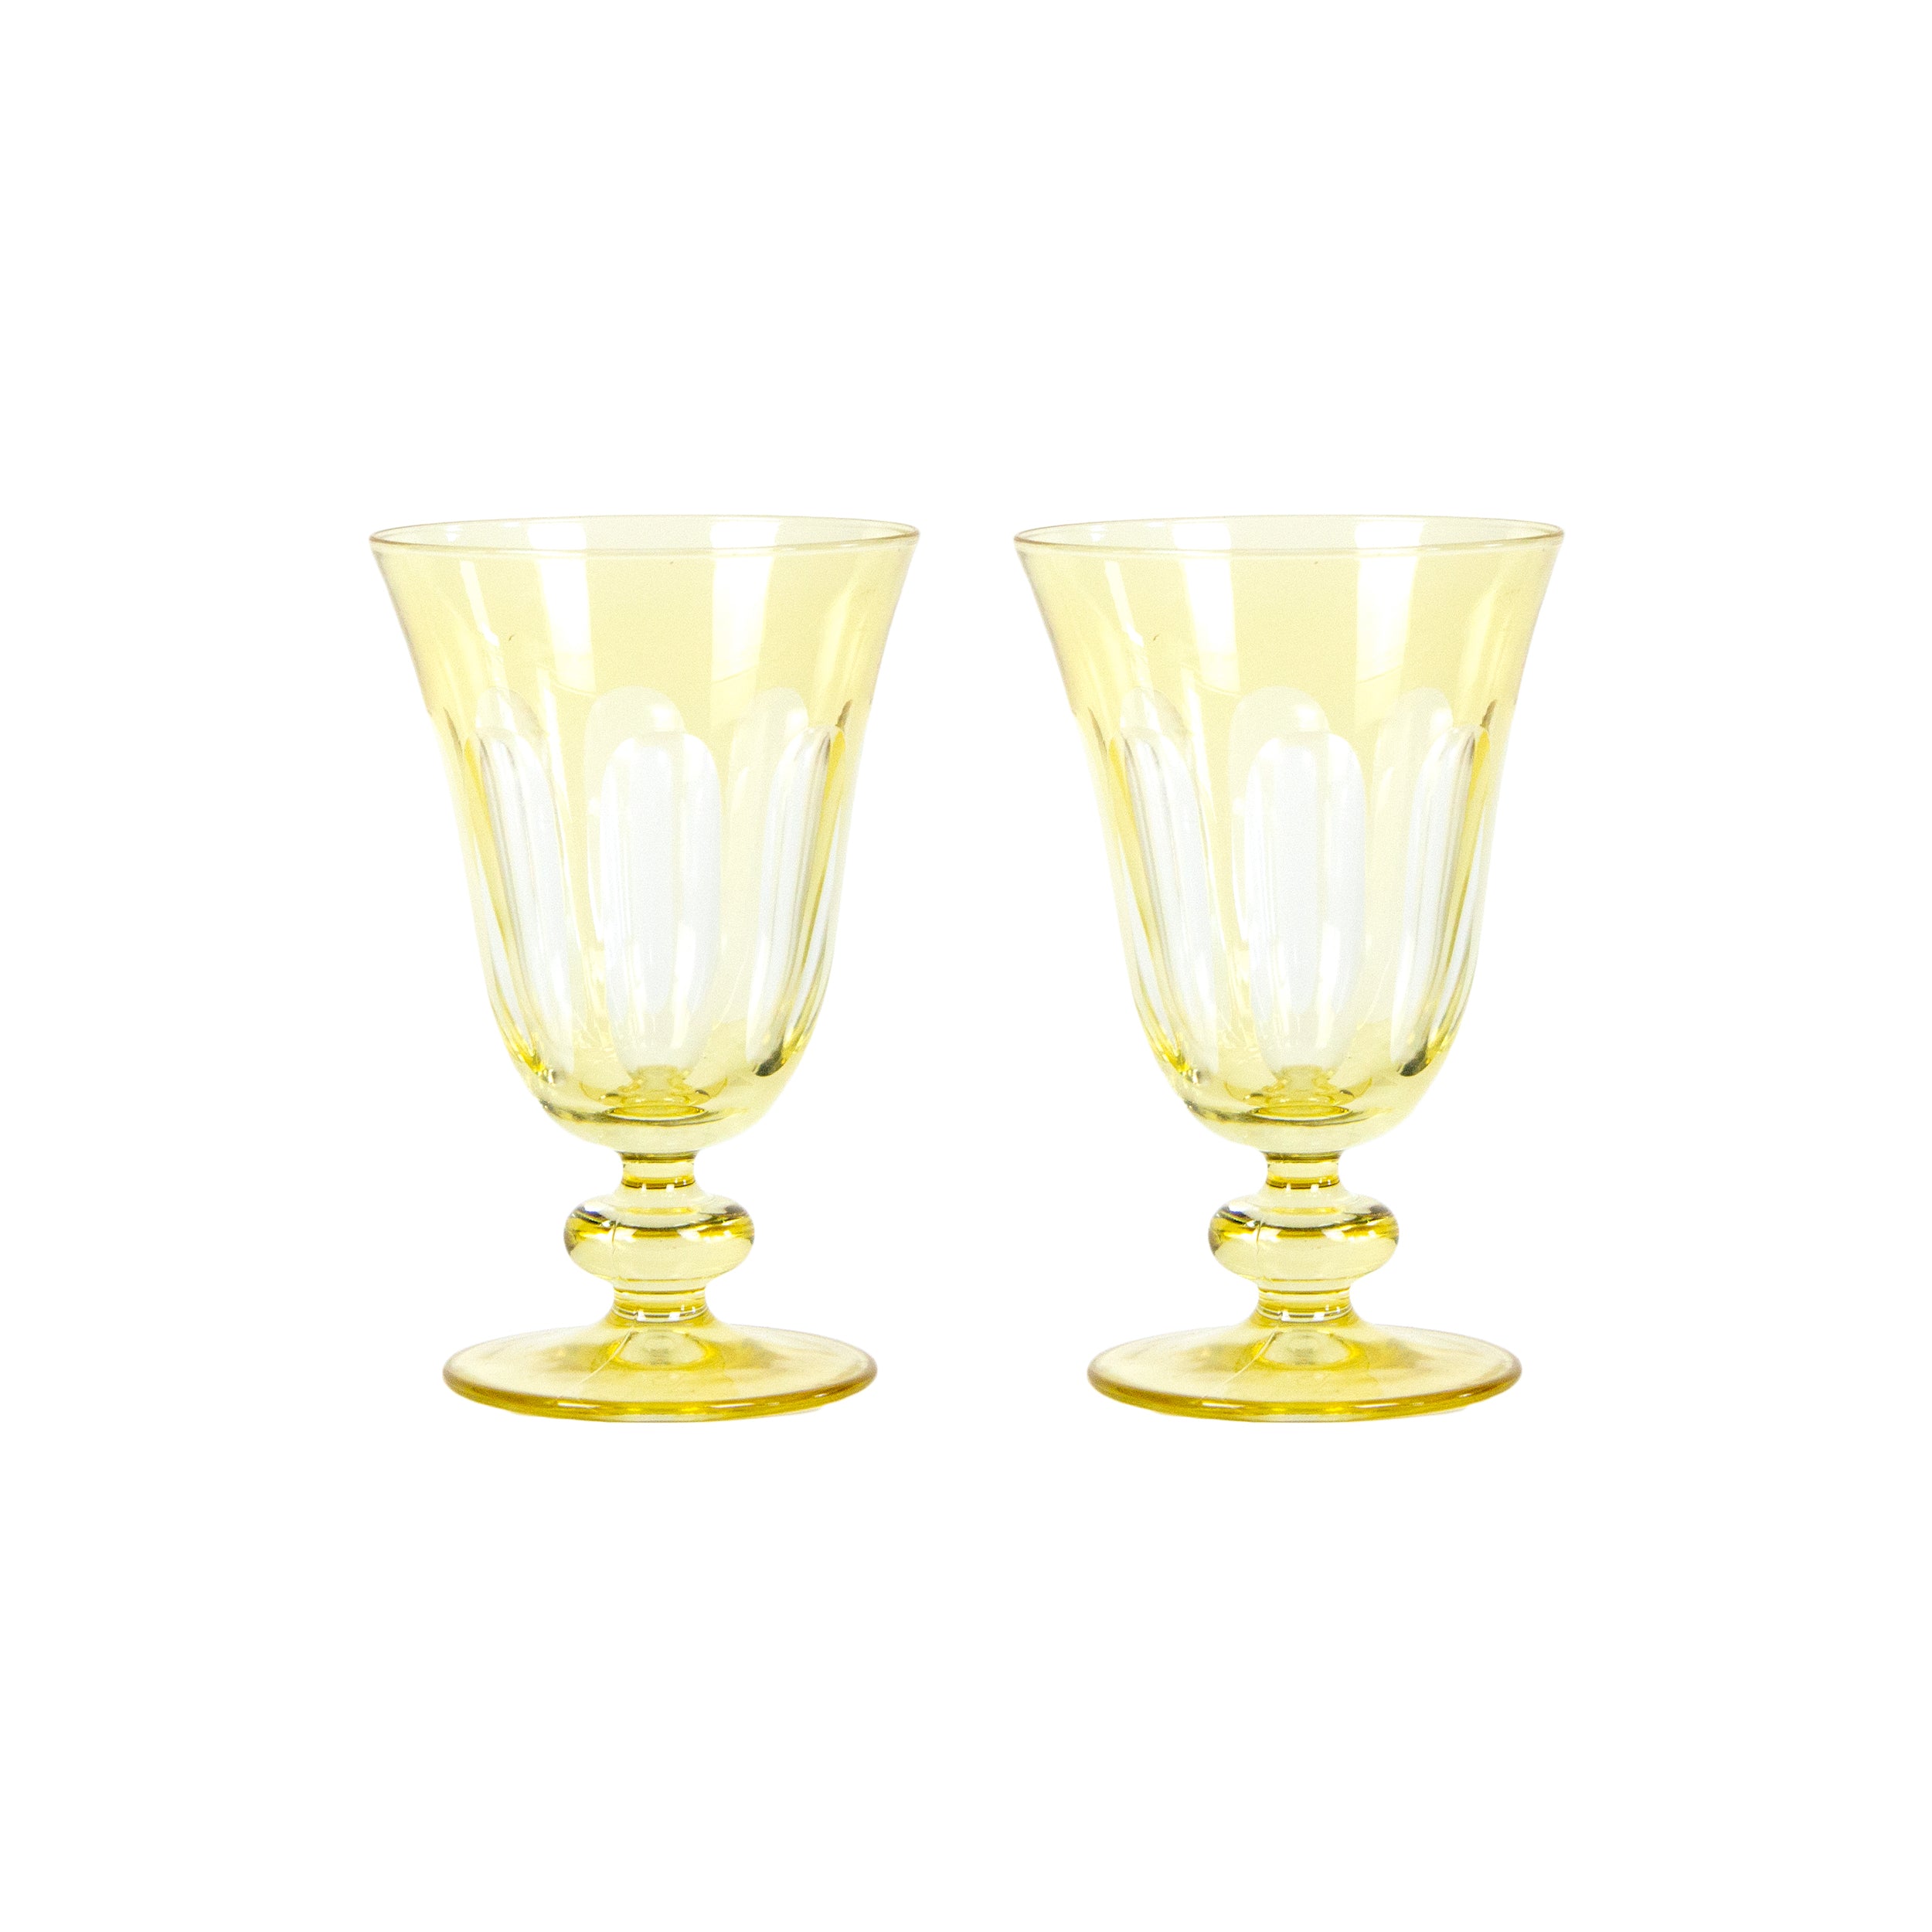 Sir Madam | Set of 2 Rialto Tulip Glasses - Limoncello